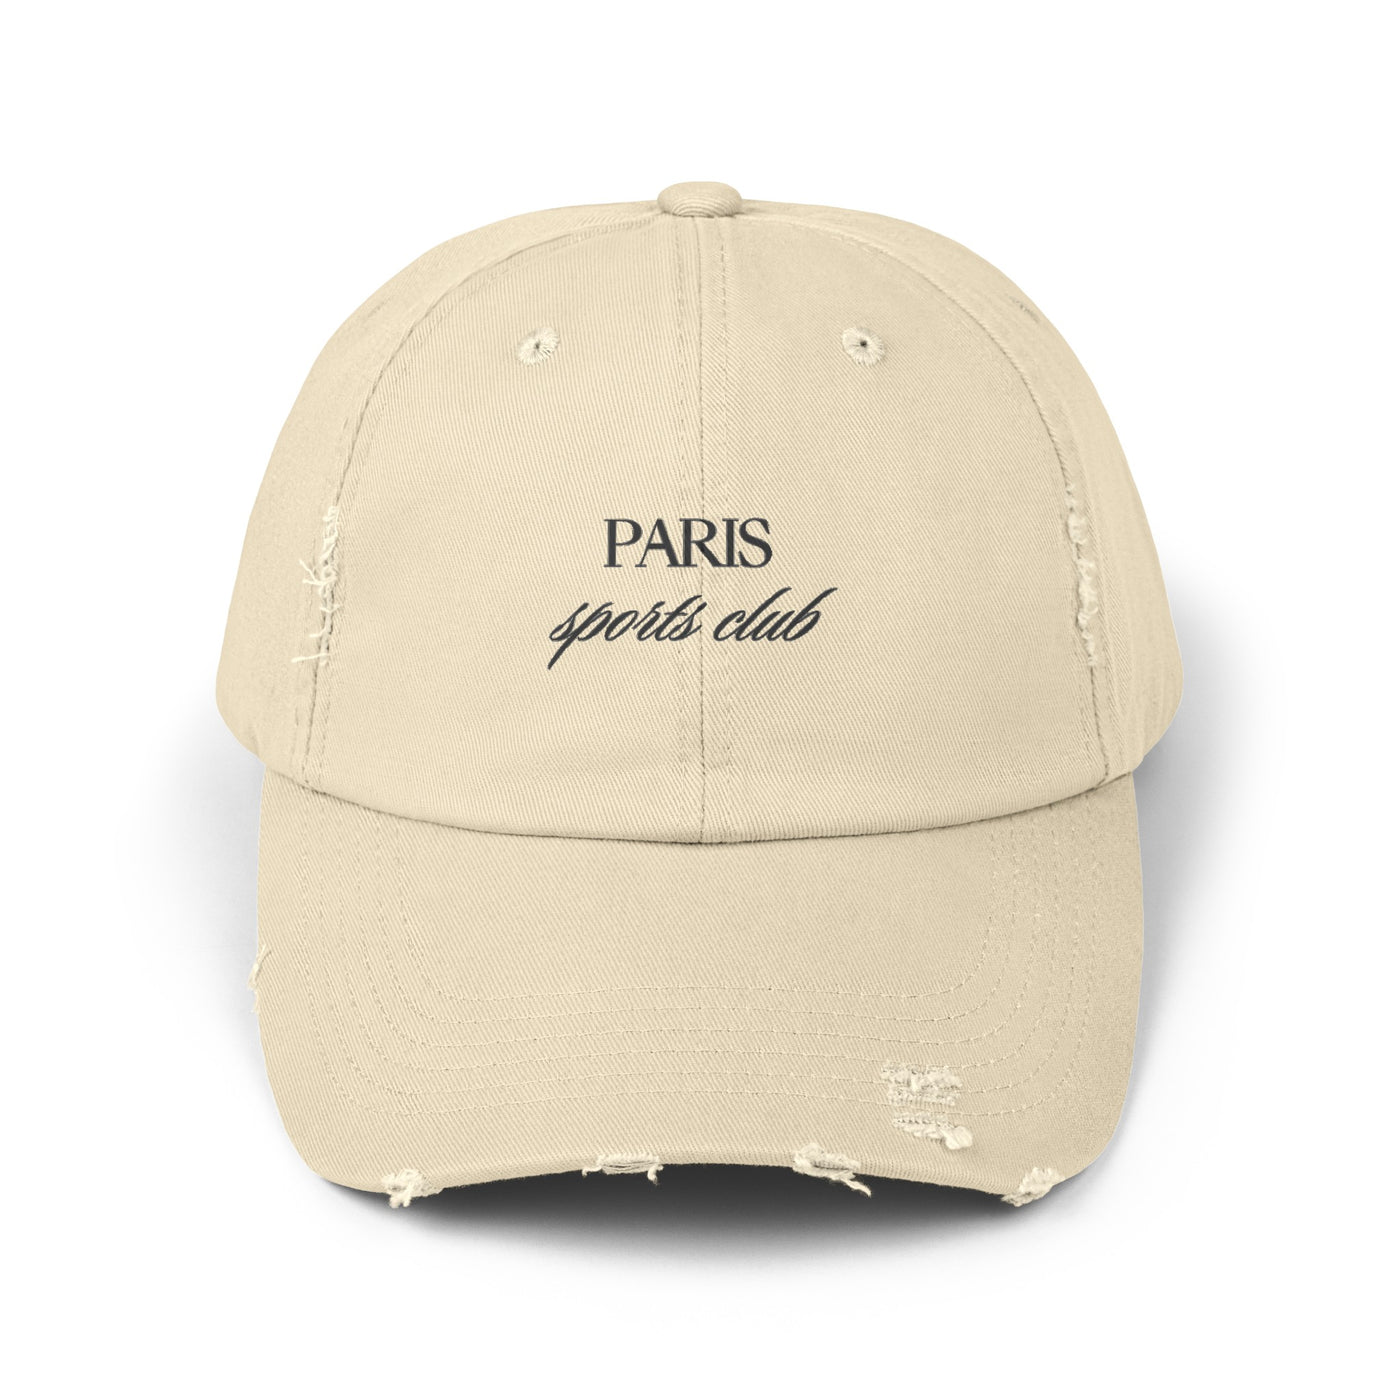 Paris Sports Club Cap